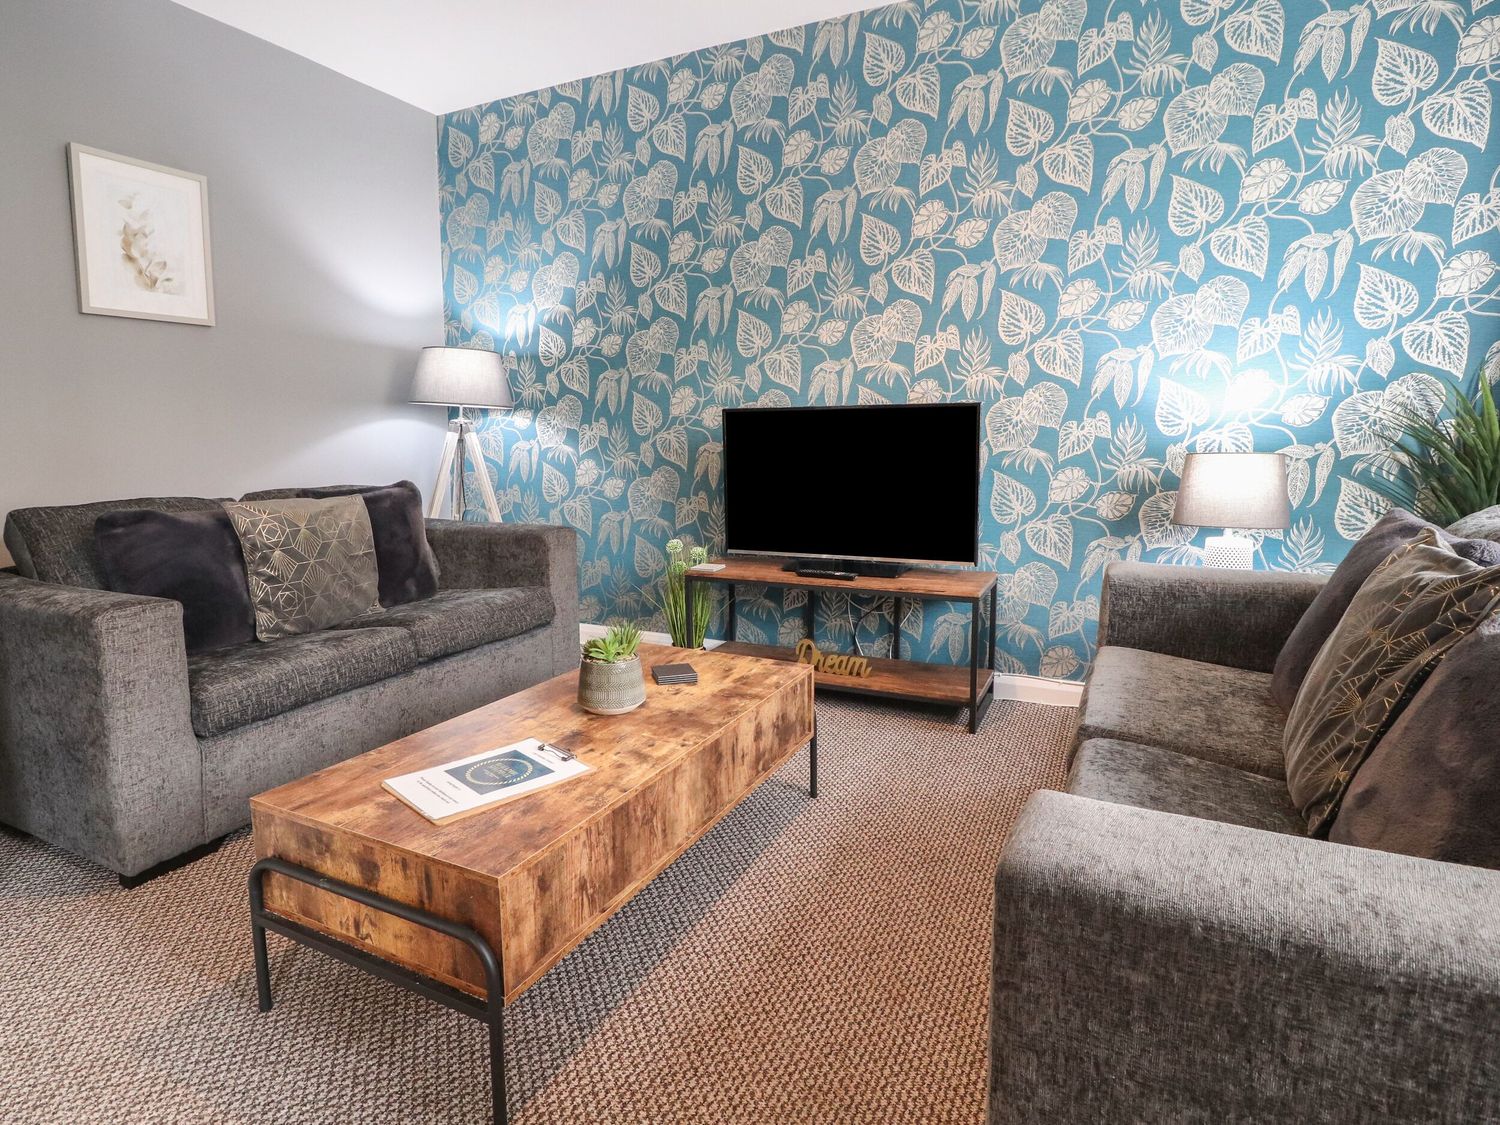 Apartment 5 @ Blackpool Sleepover - Lake District - 1129719 - photo 1